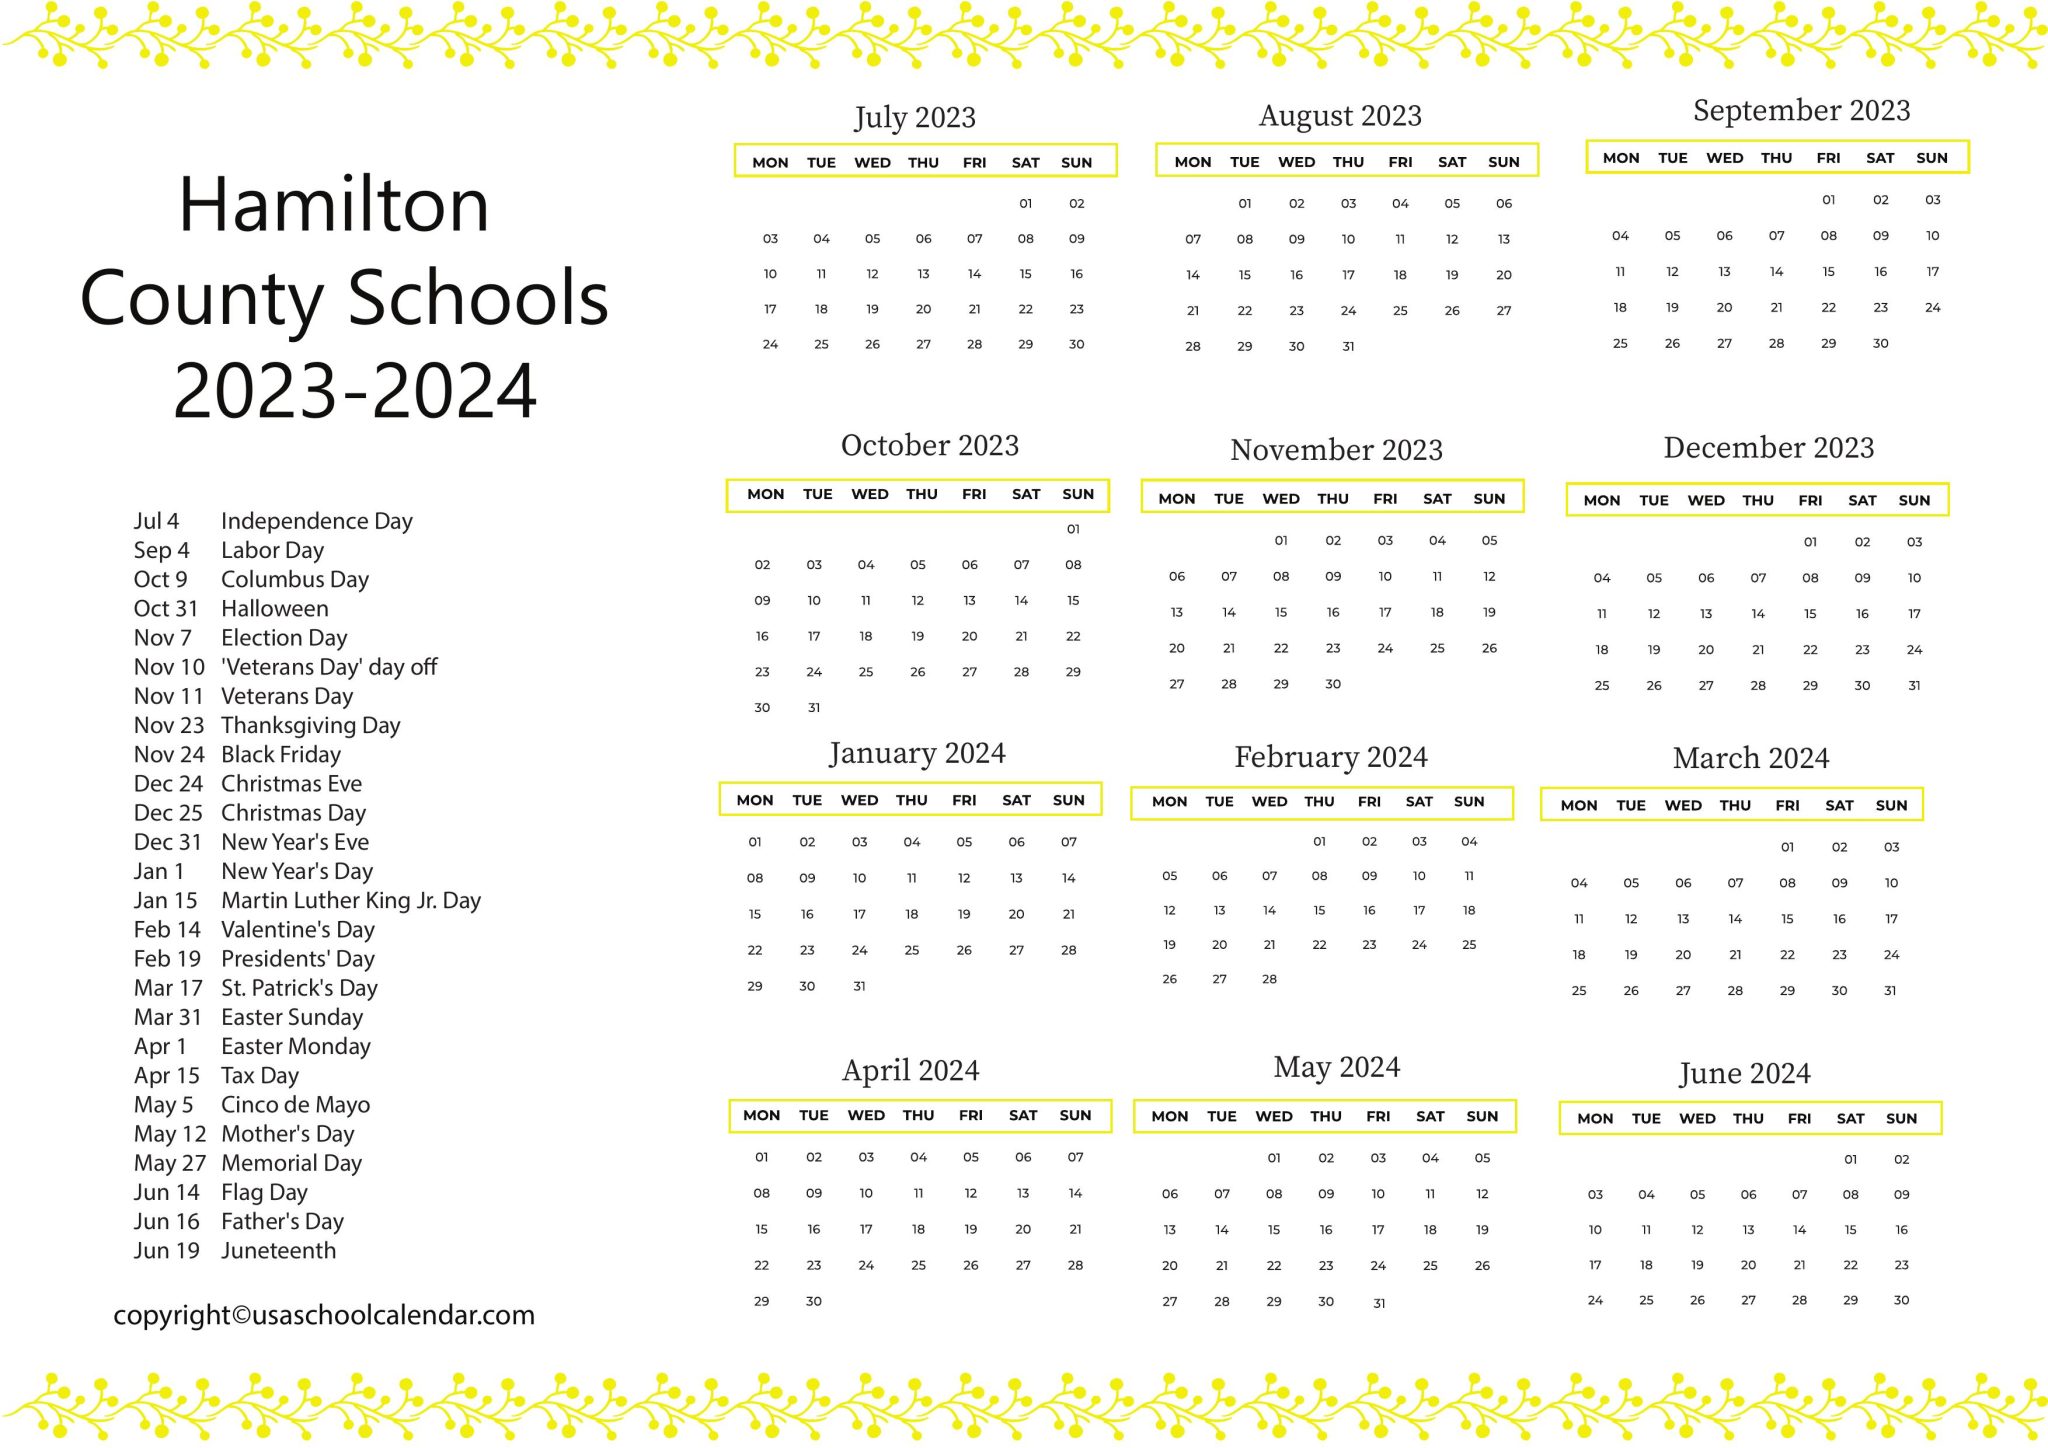 Hamilton County Schools Calendar Holidays 2023-2024